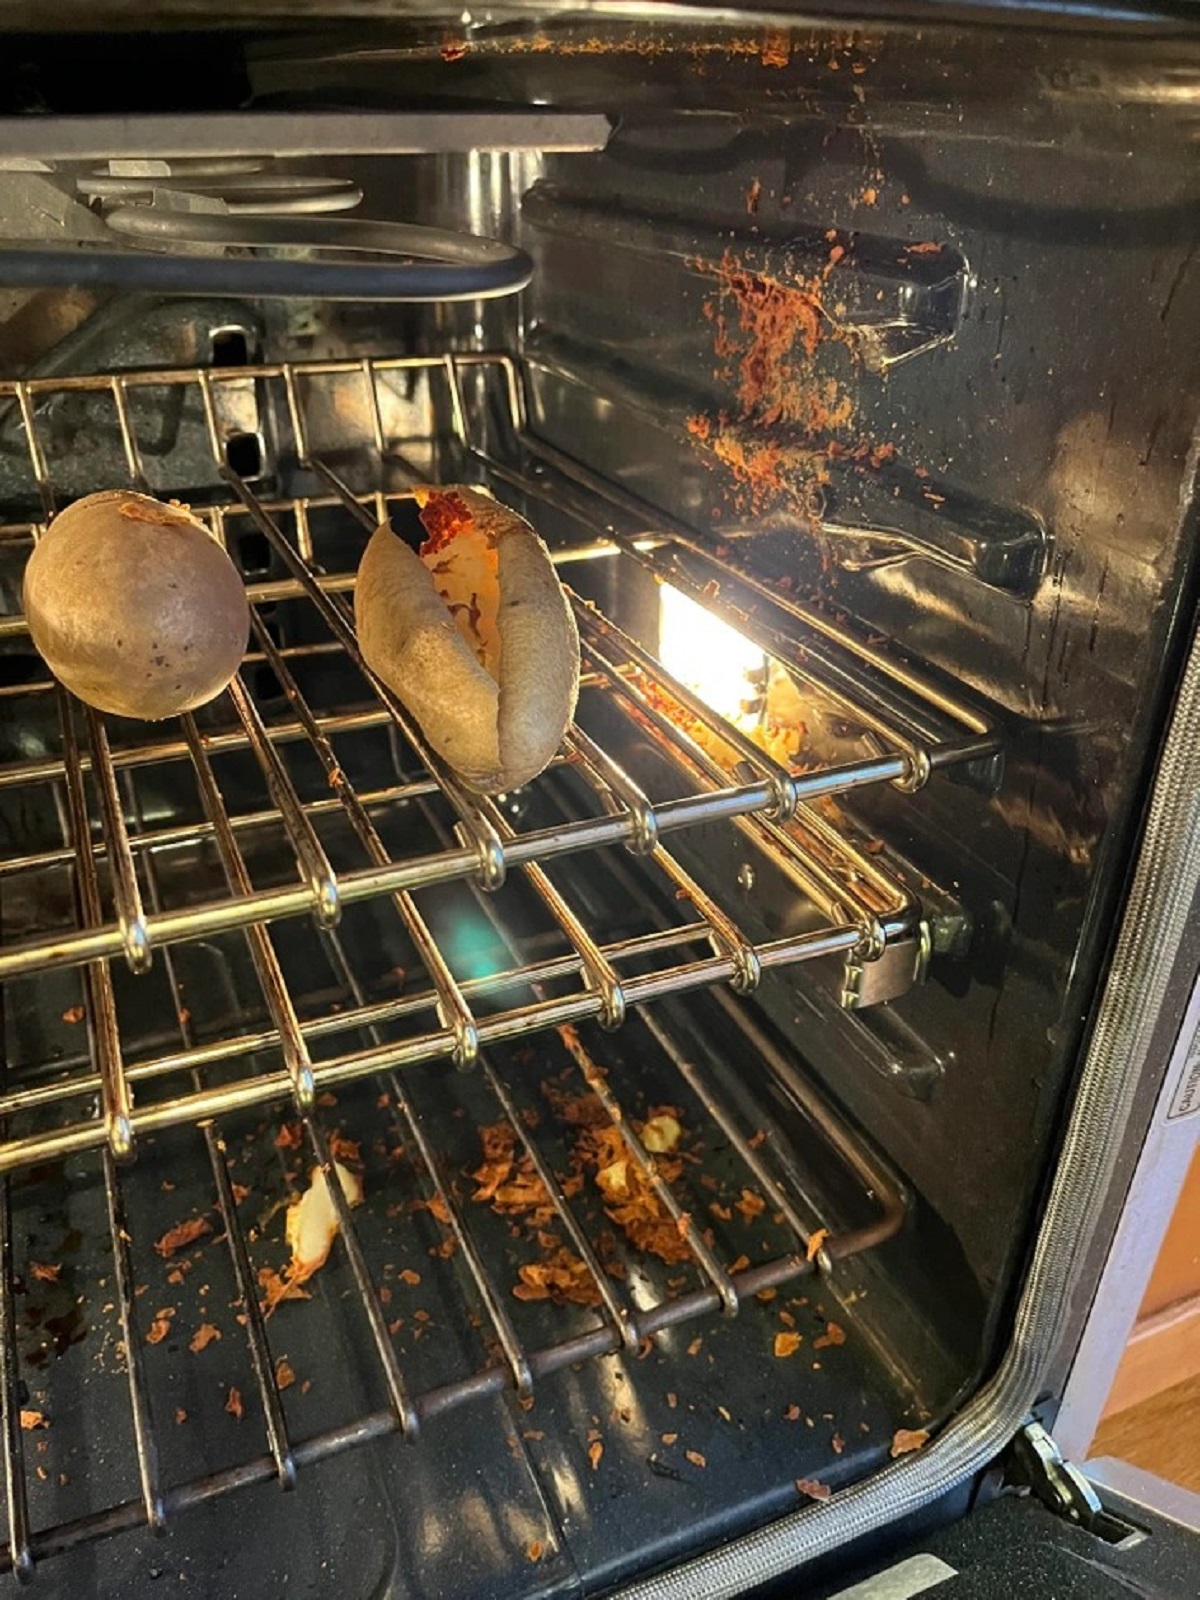 The potato burst open while cooking.